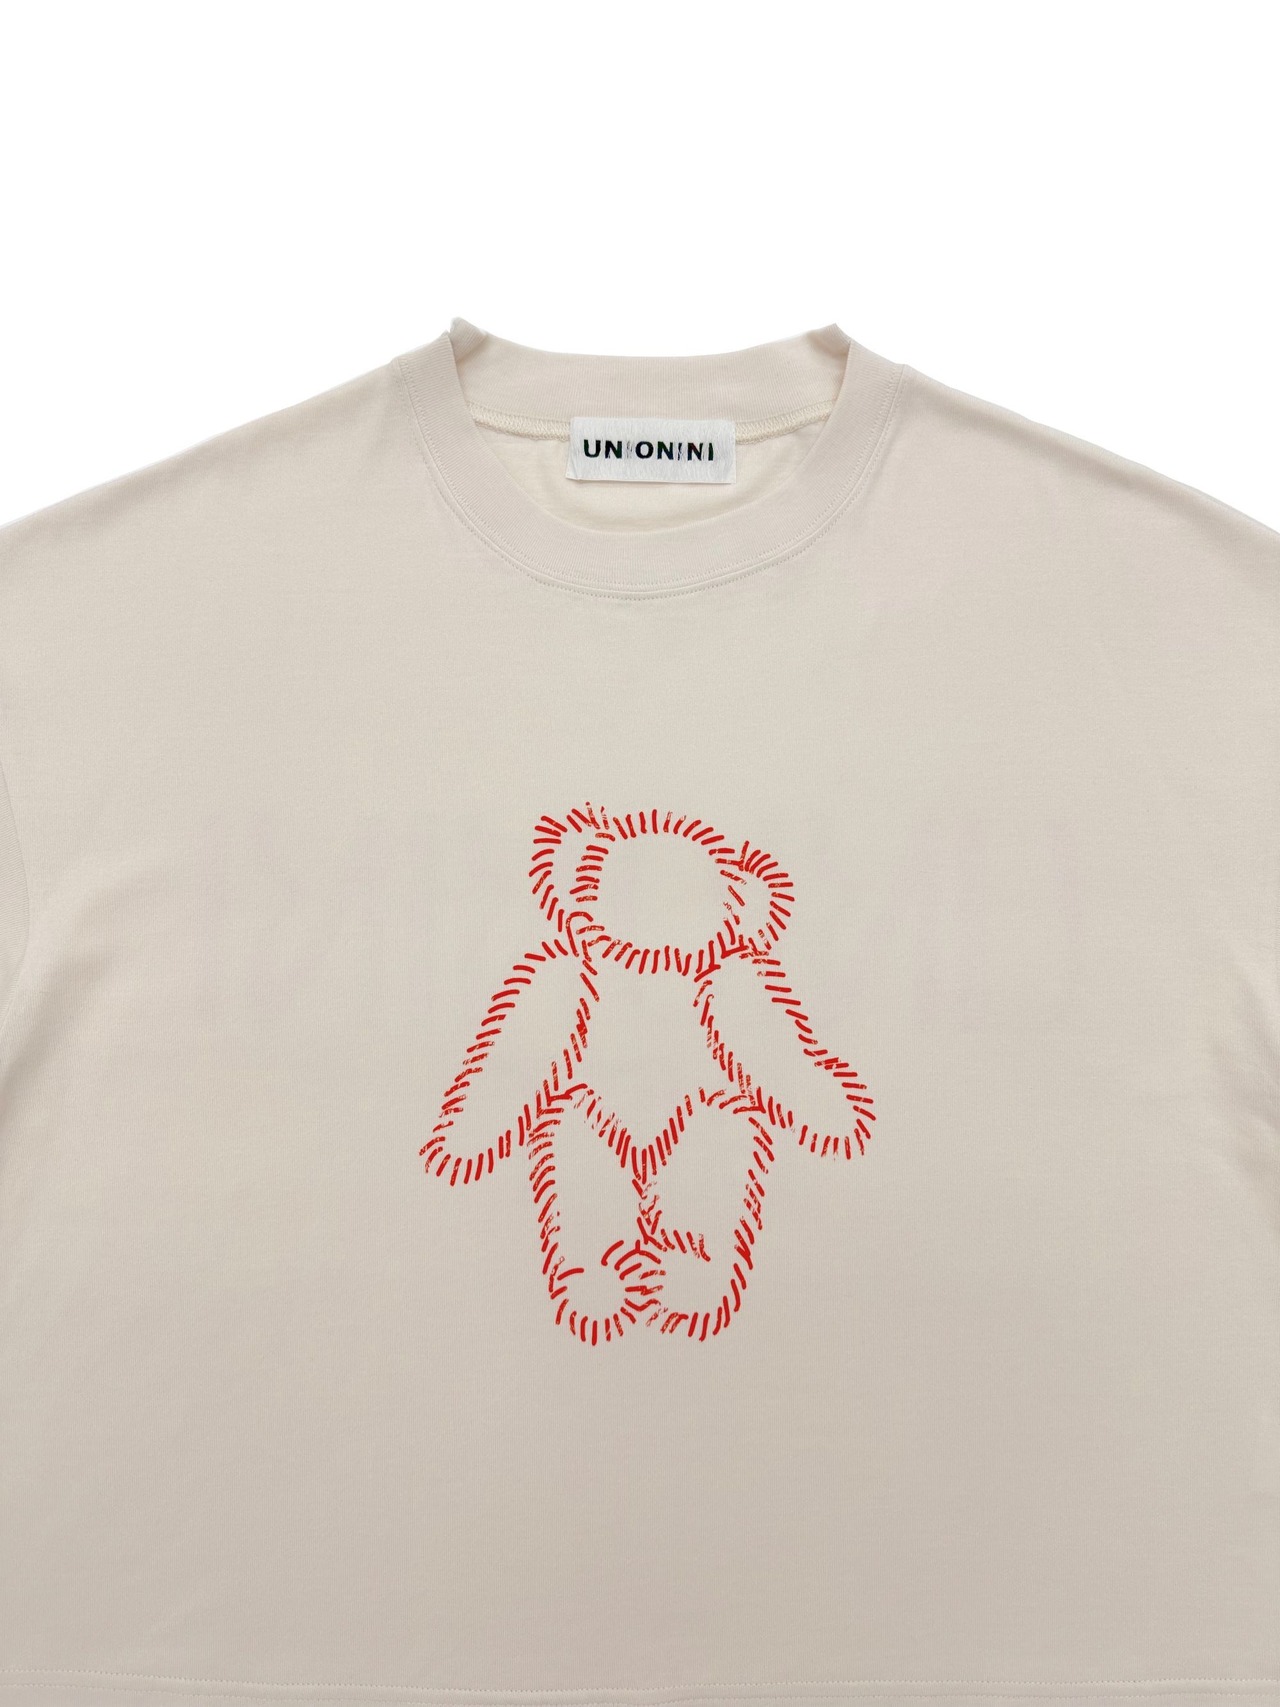 〈 UNIONINI 24SS 〉 teddybear logo big tee "Tシャツ" / Pink Beige / Womens'